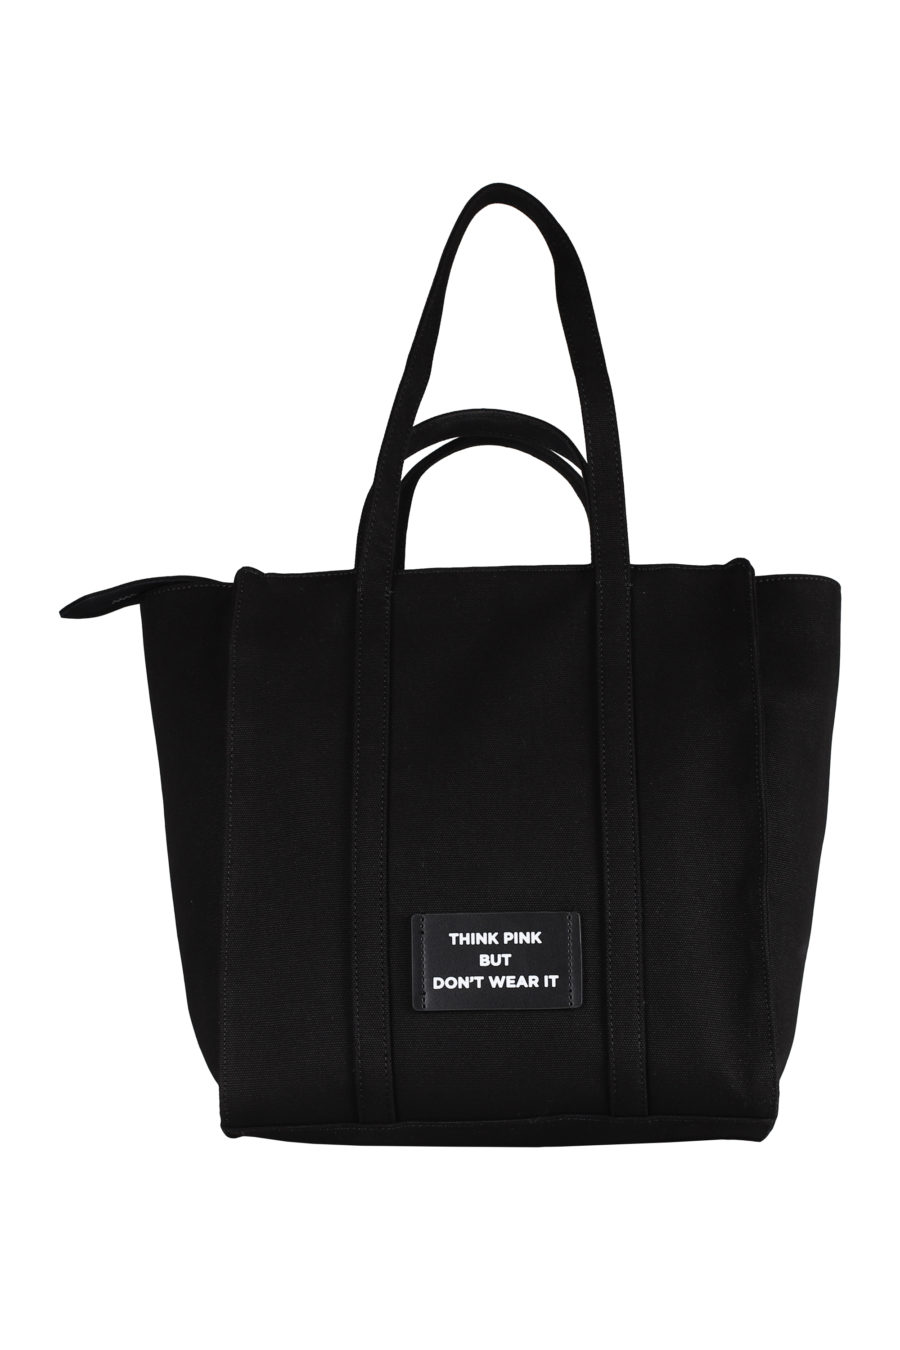 Black tote bag with "Karl" logo - IMG 9743